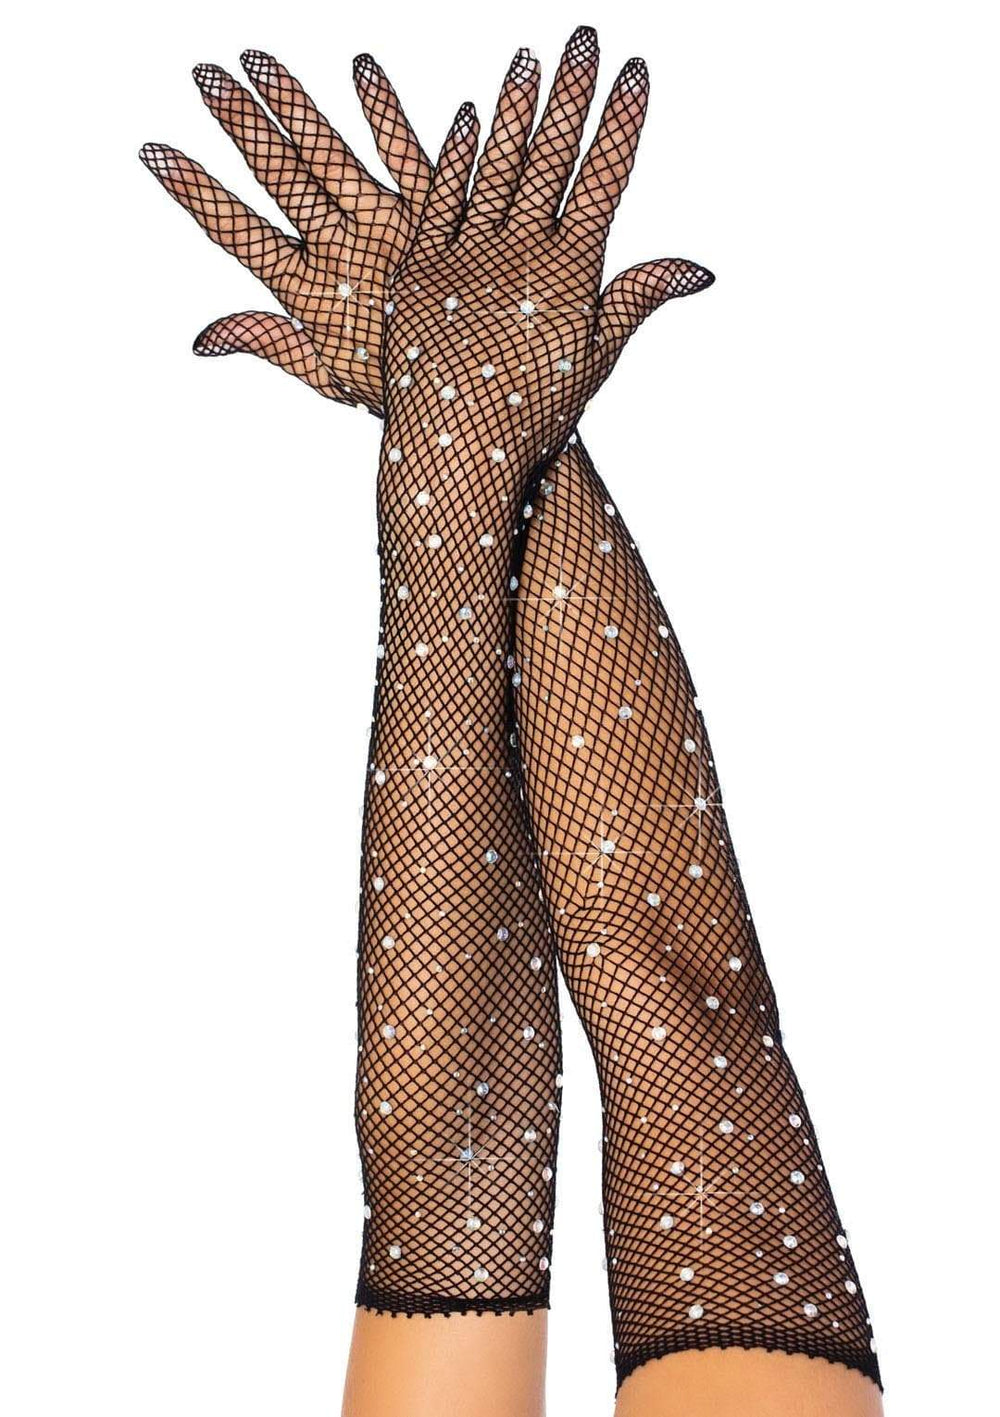 Opera Crystal Gloves